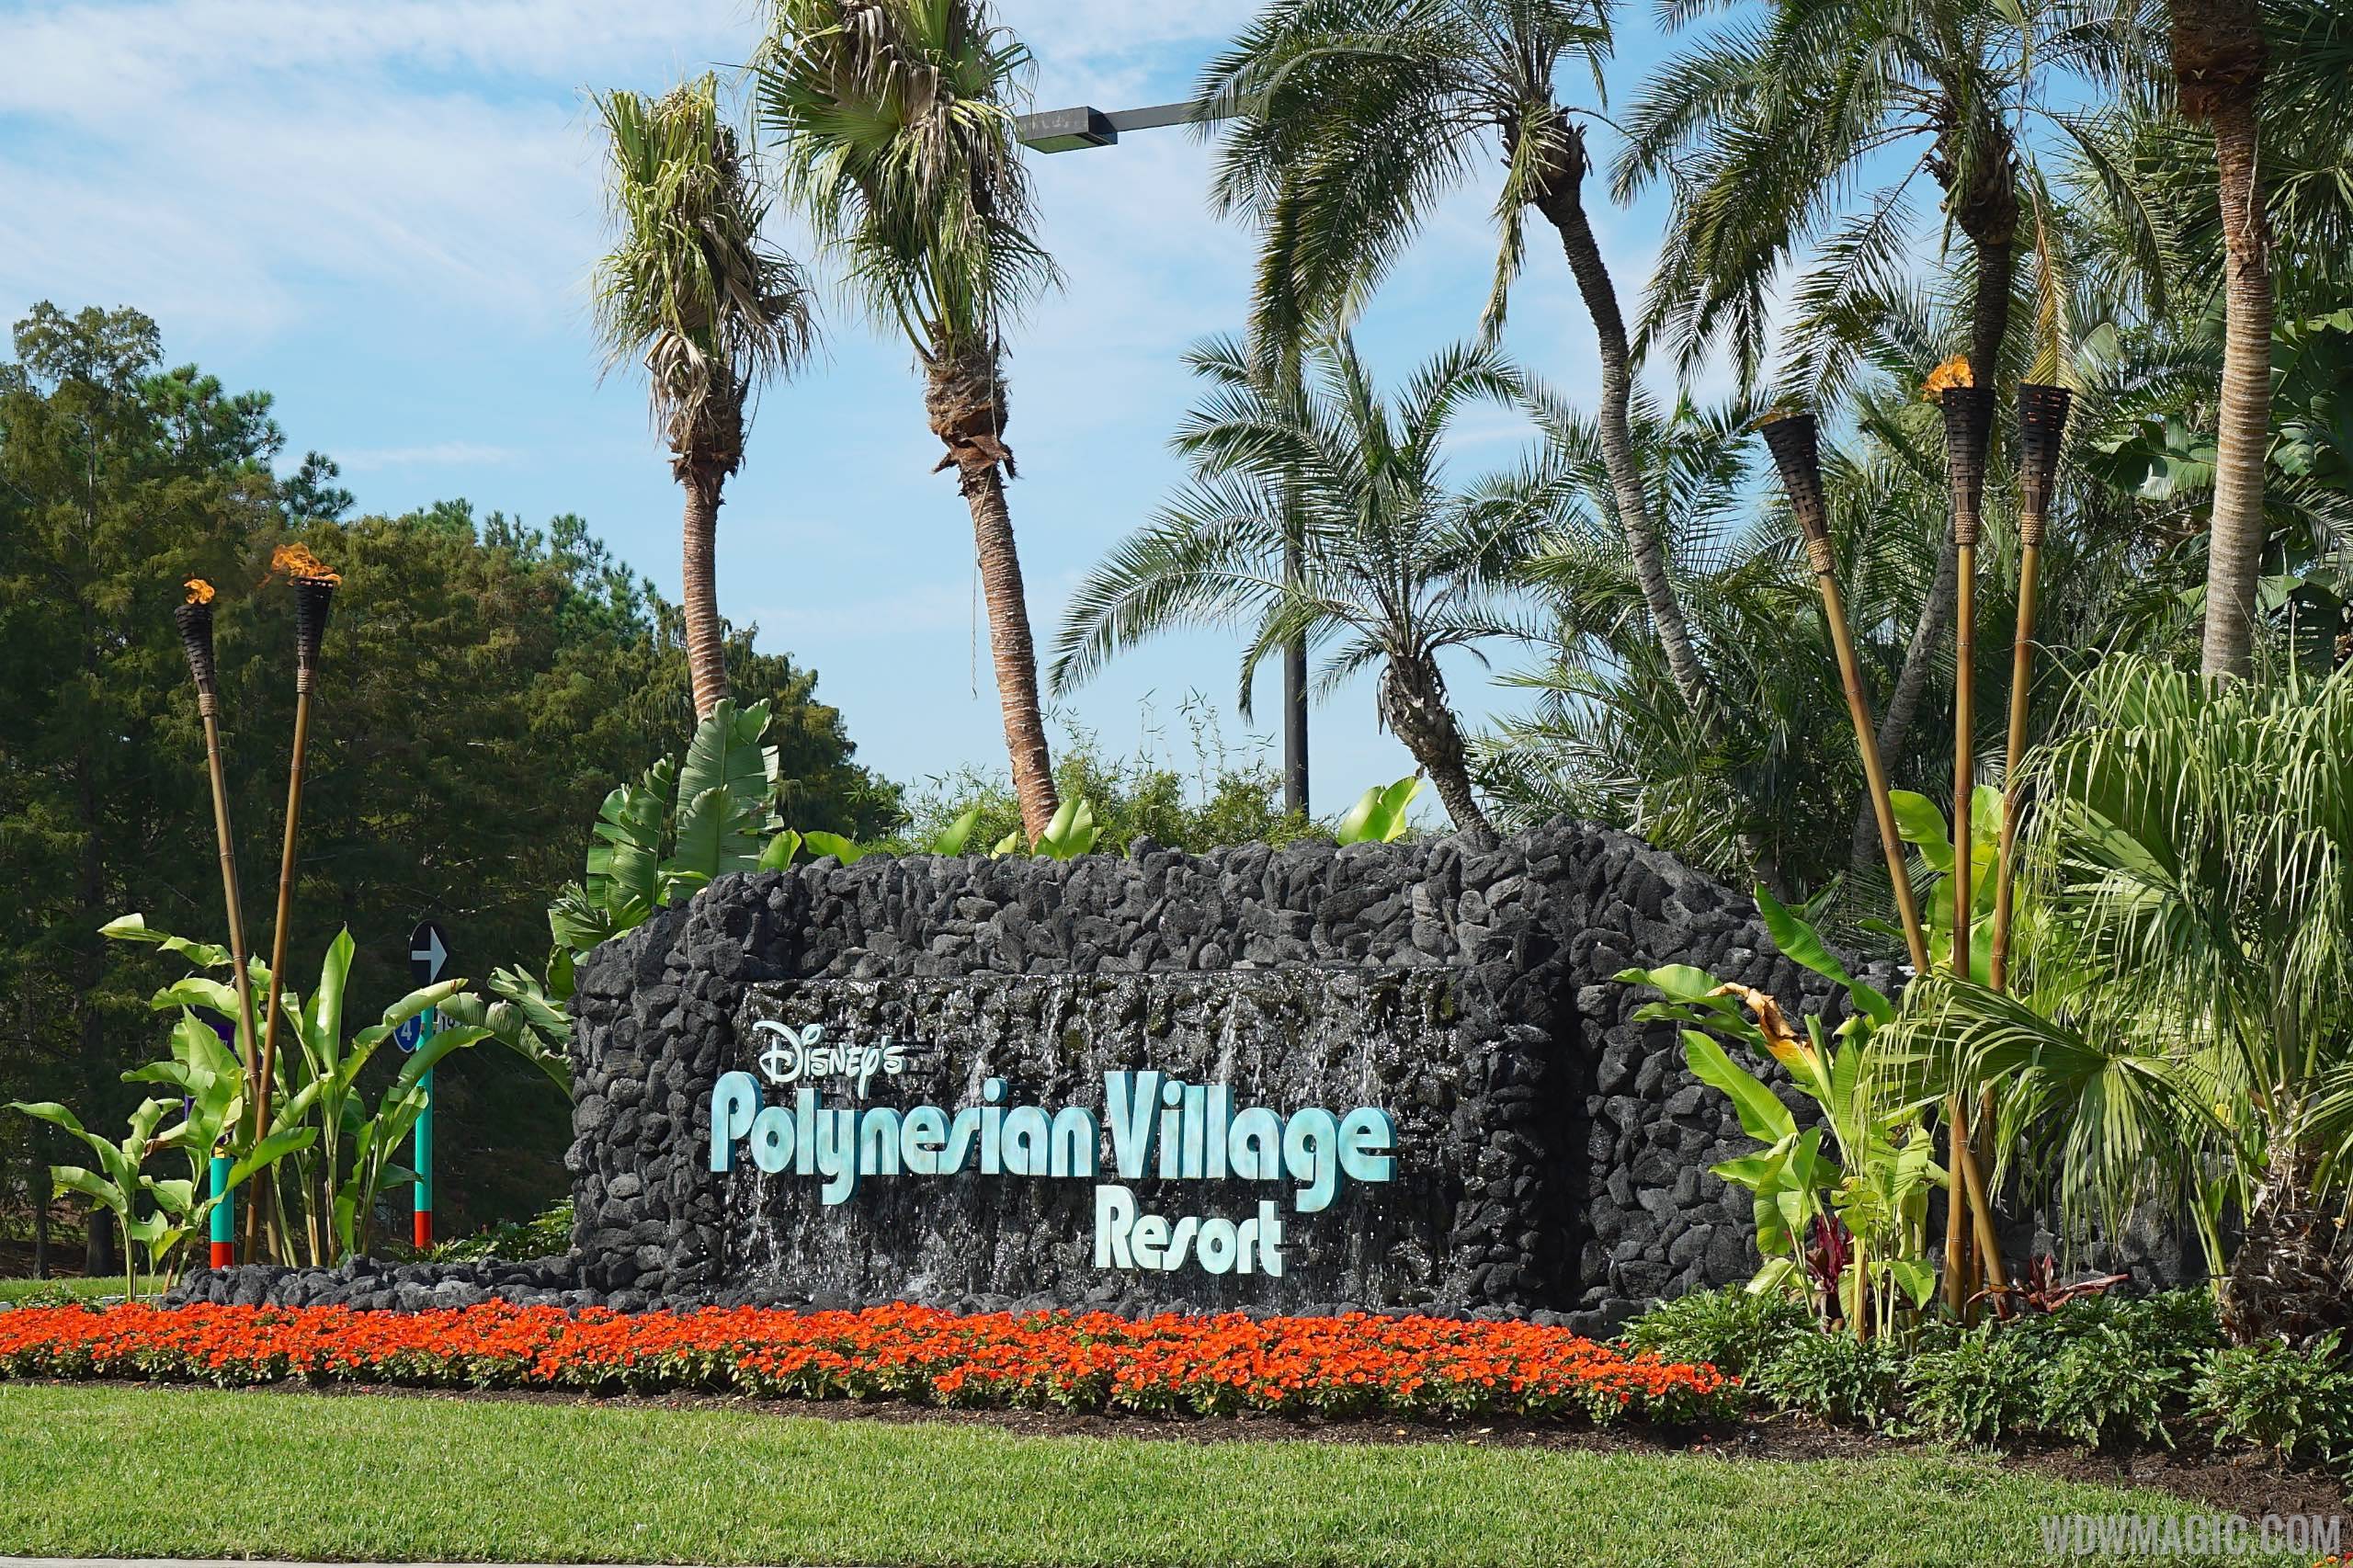 PHOTOS - A look at the new Polynesian Village Resort main entrance sign